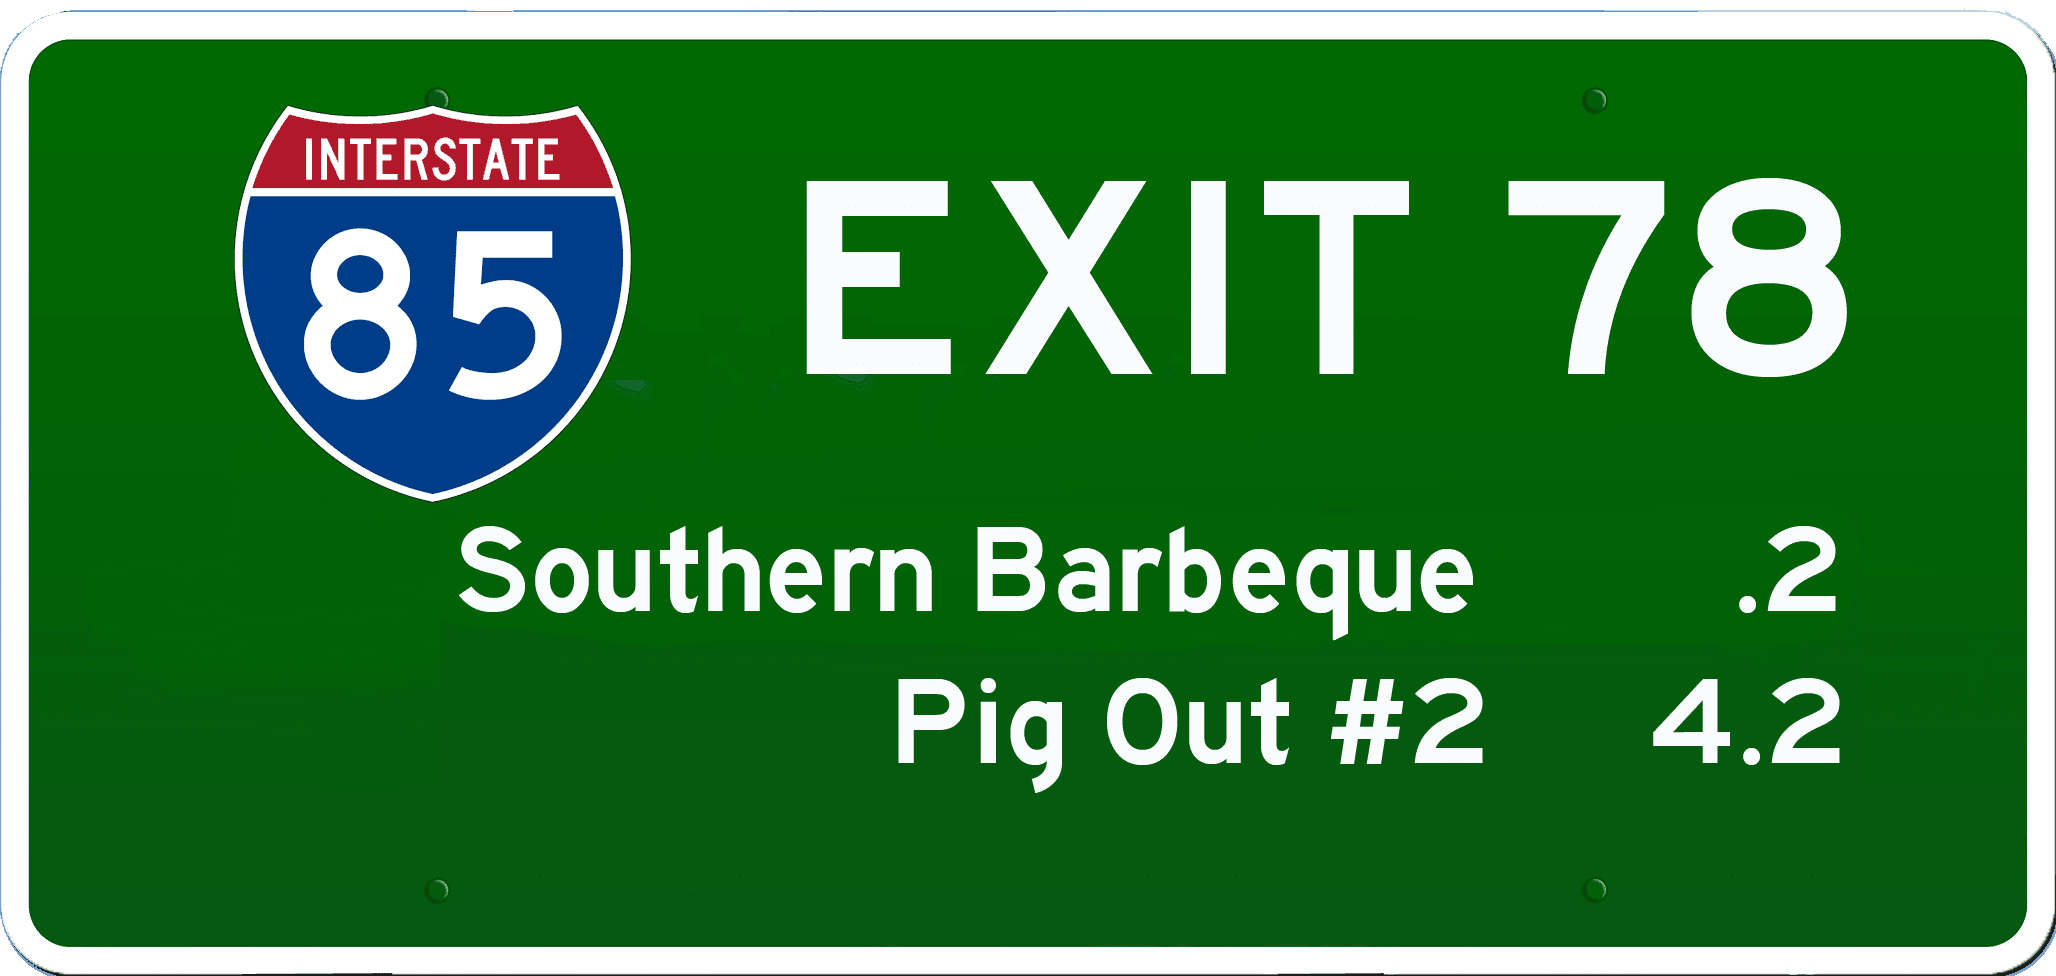 SC BBQ on I-85 at Exit 78